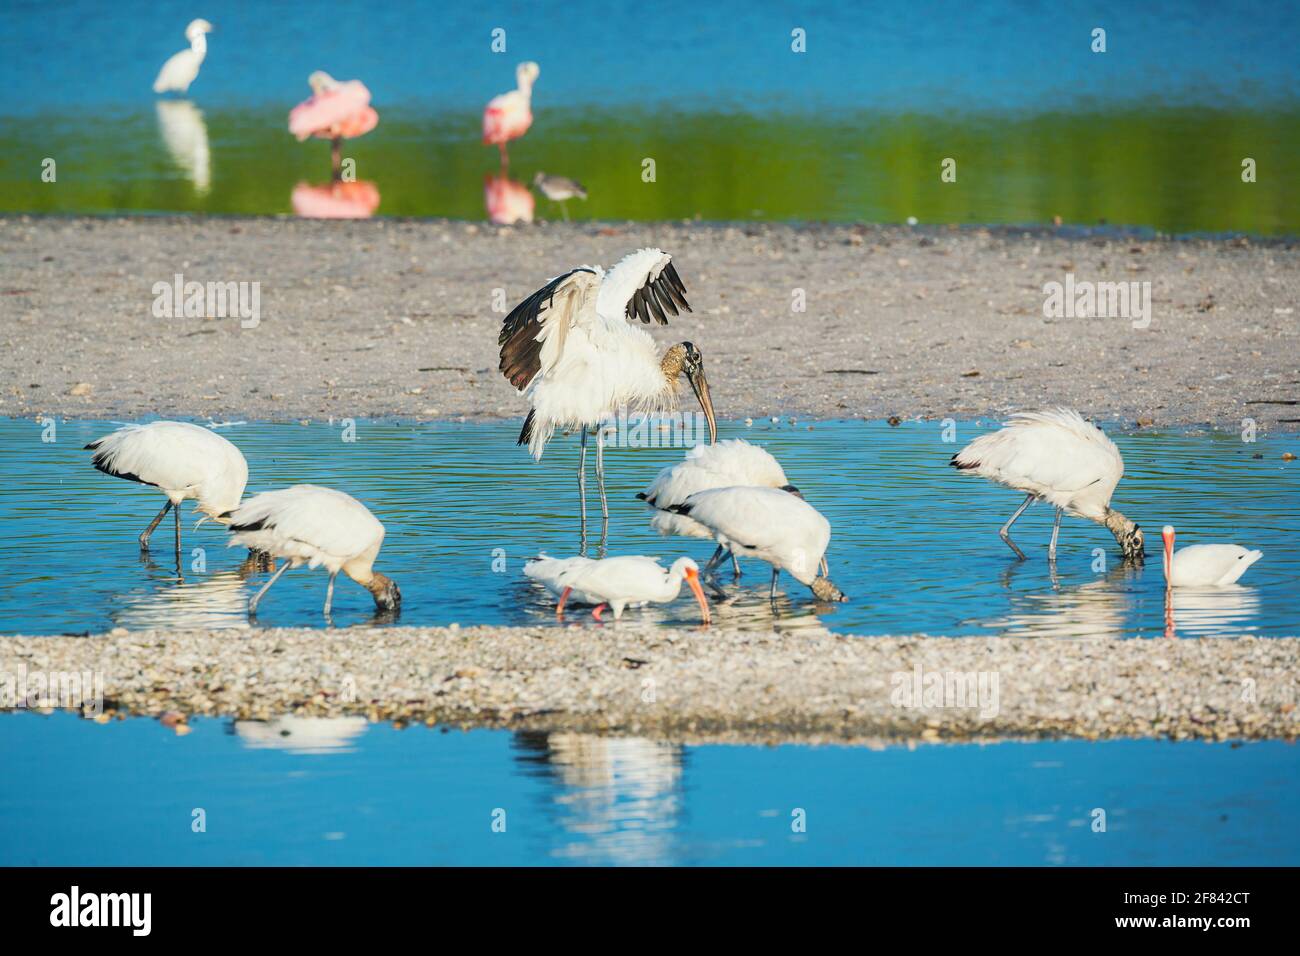 Wood Stork (Mycteria Americana) and Roseate Spoonbills (Platalea ajaja) fishing, Sanibel Island, J.N. Ding Darling National Wildlife Refuge, Florida, Stock Photo